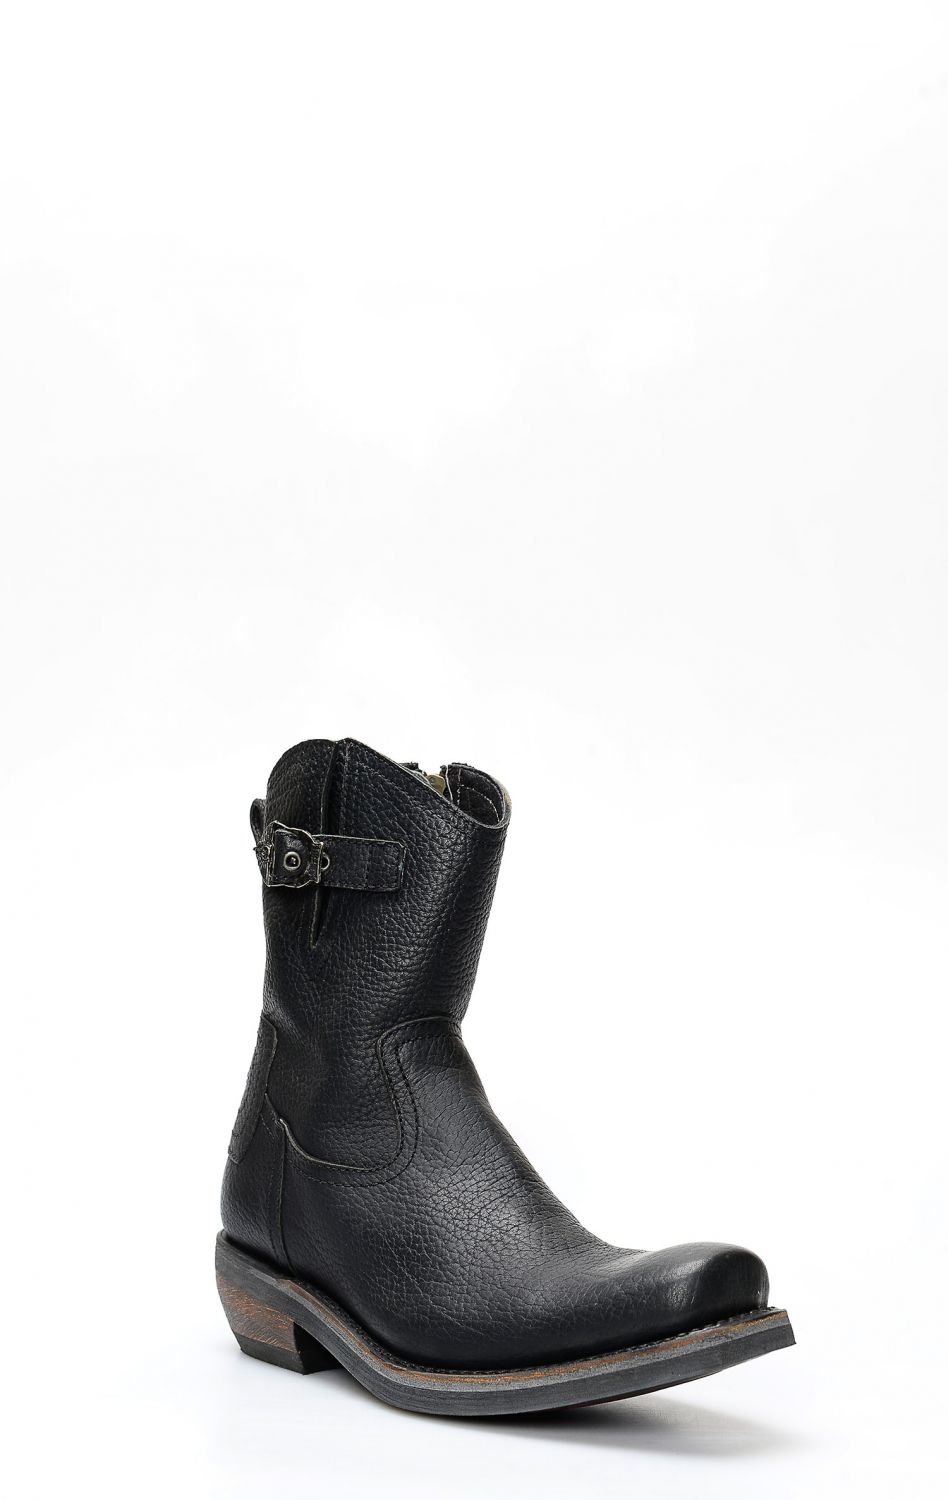 Liberty Black biker boot with zipper and square toe | LBK85004GZN